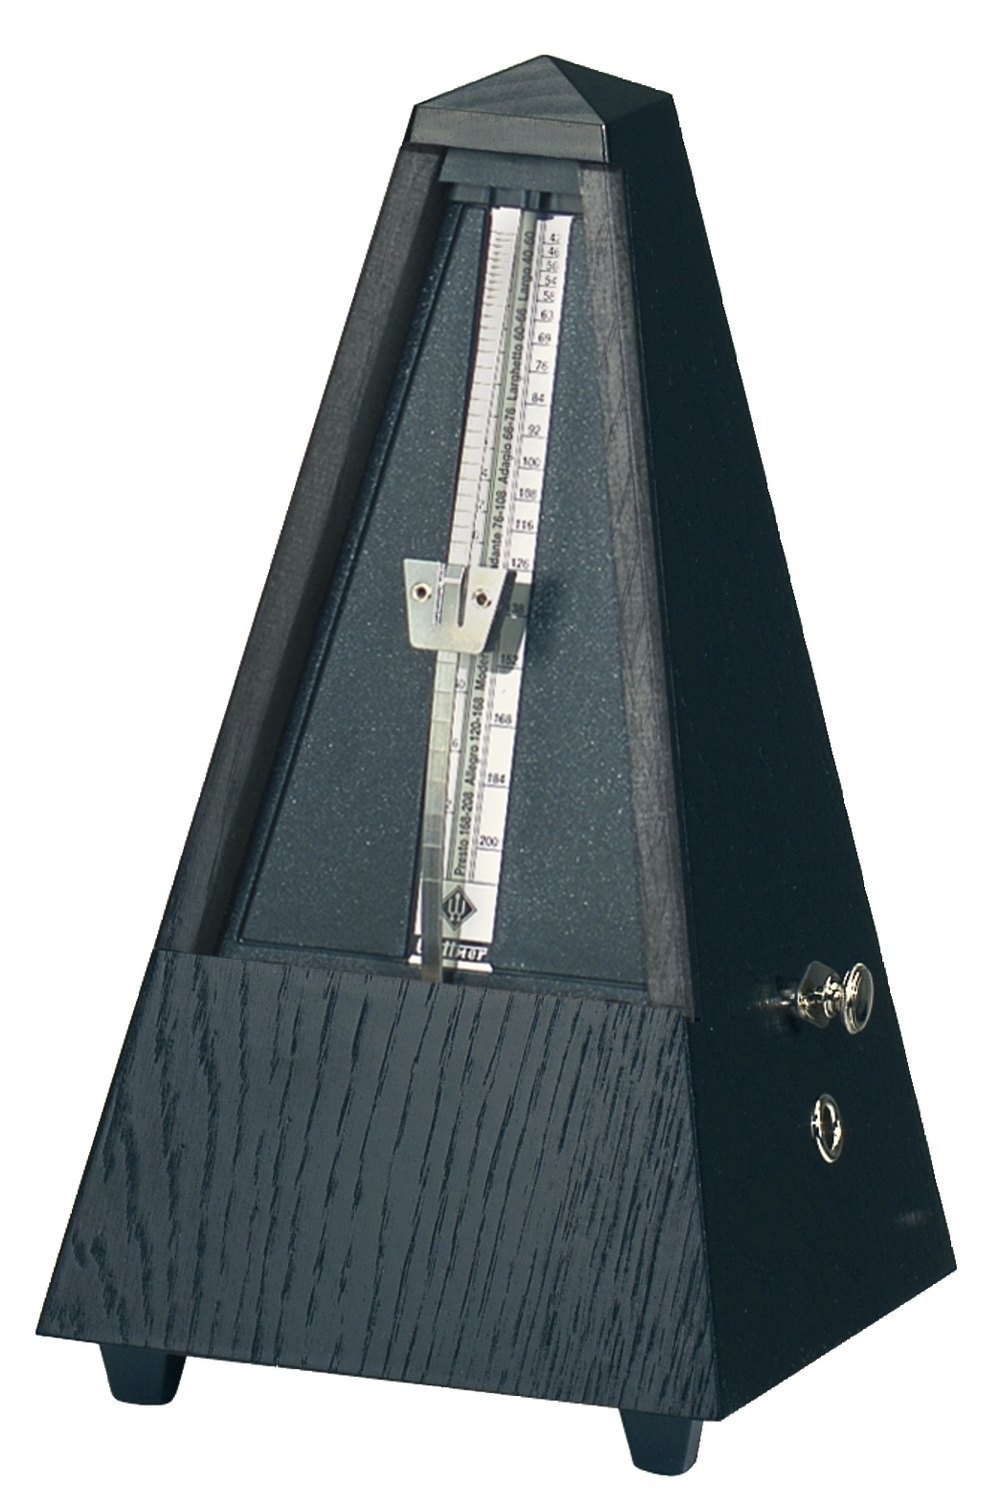 Wittner Taktell Pyramidenform, Holzgehäuse mit Glocke Bild 1